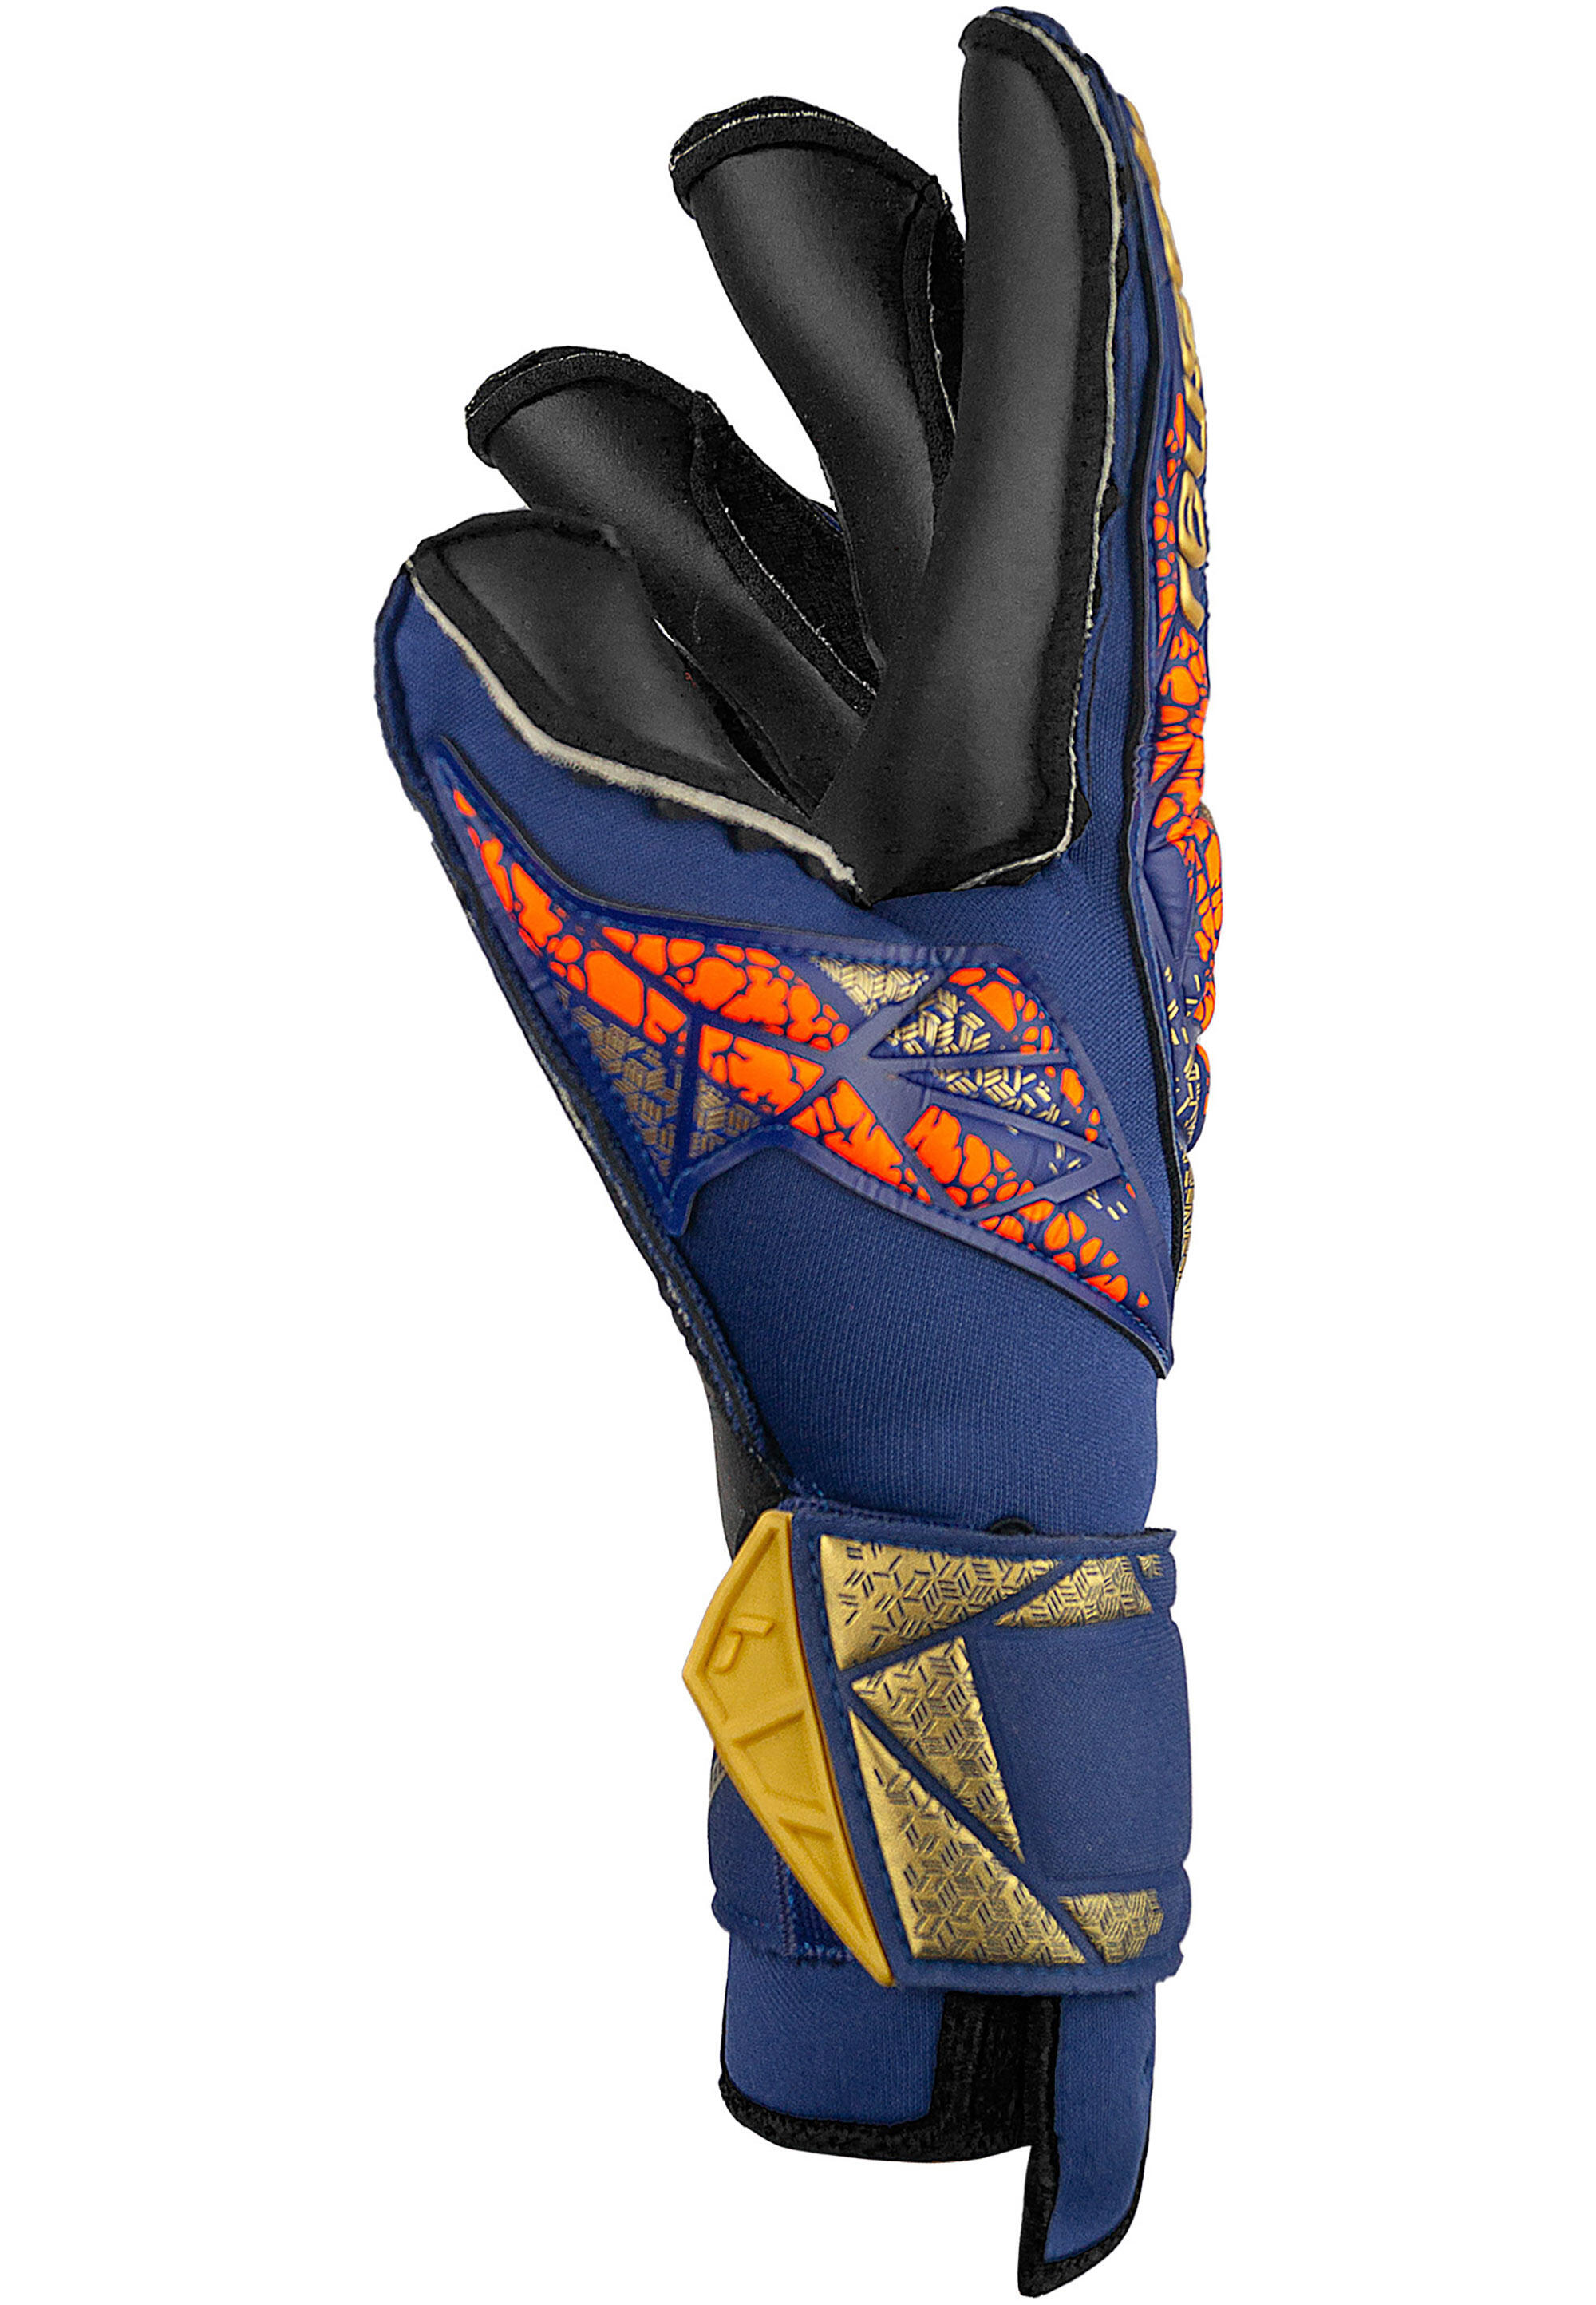 Reusch Attrakt Duo Evolution (Alisson model) Goalkeeper Gloves 3/7